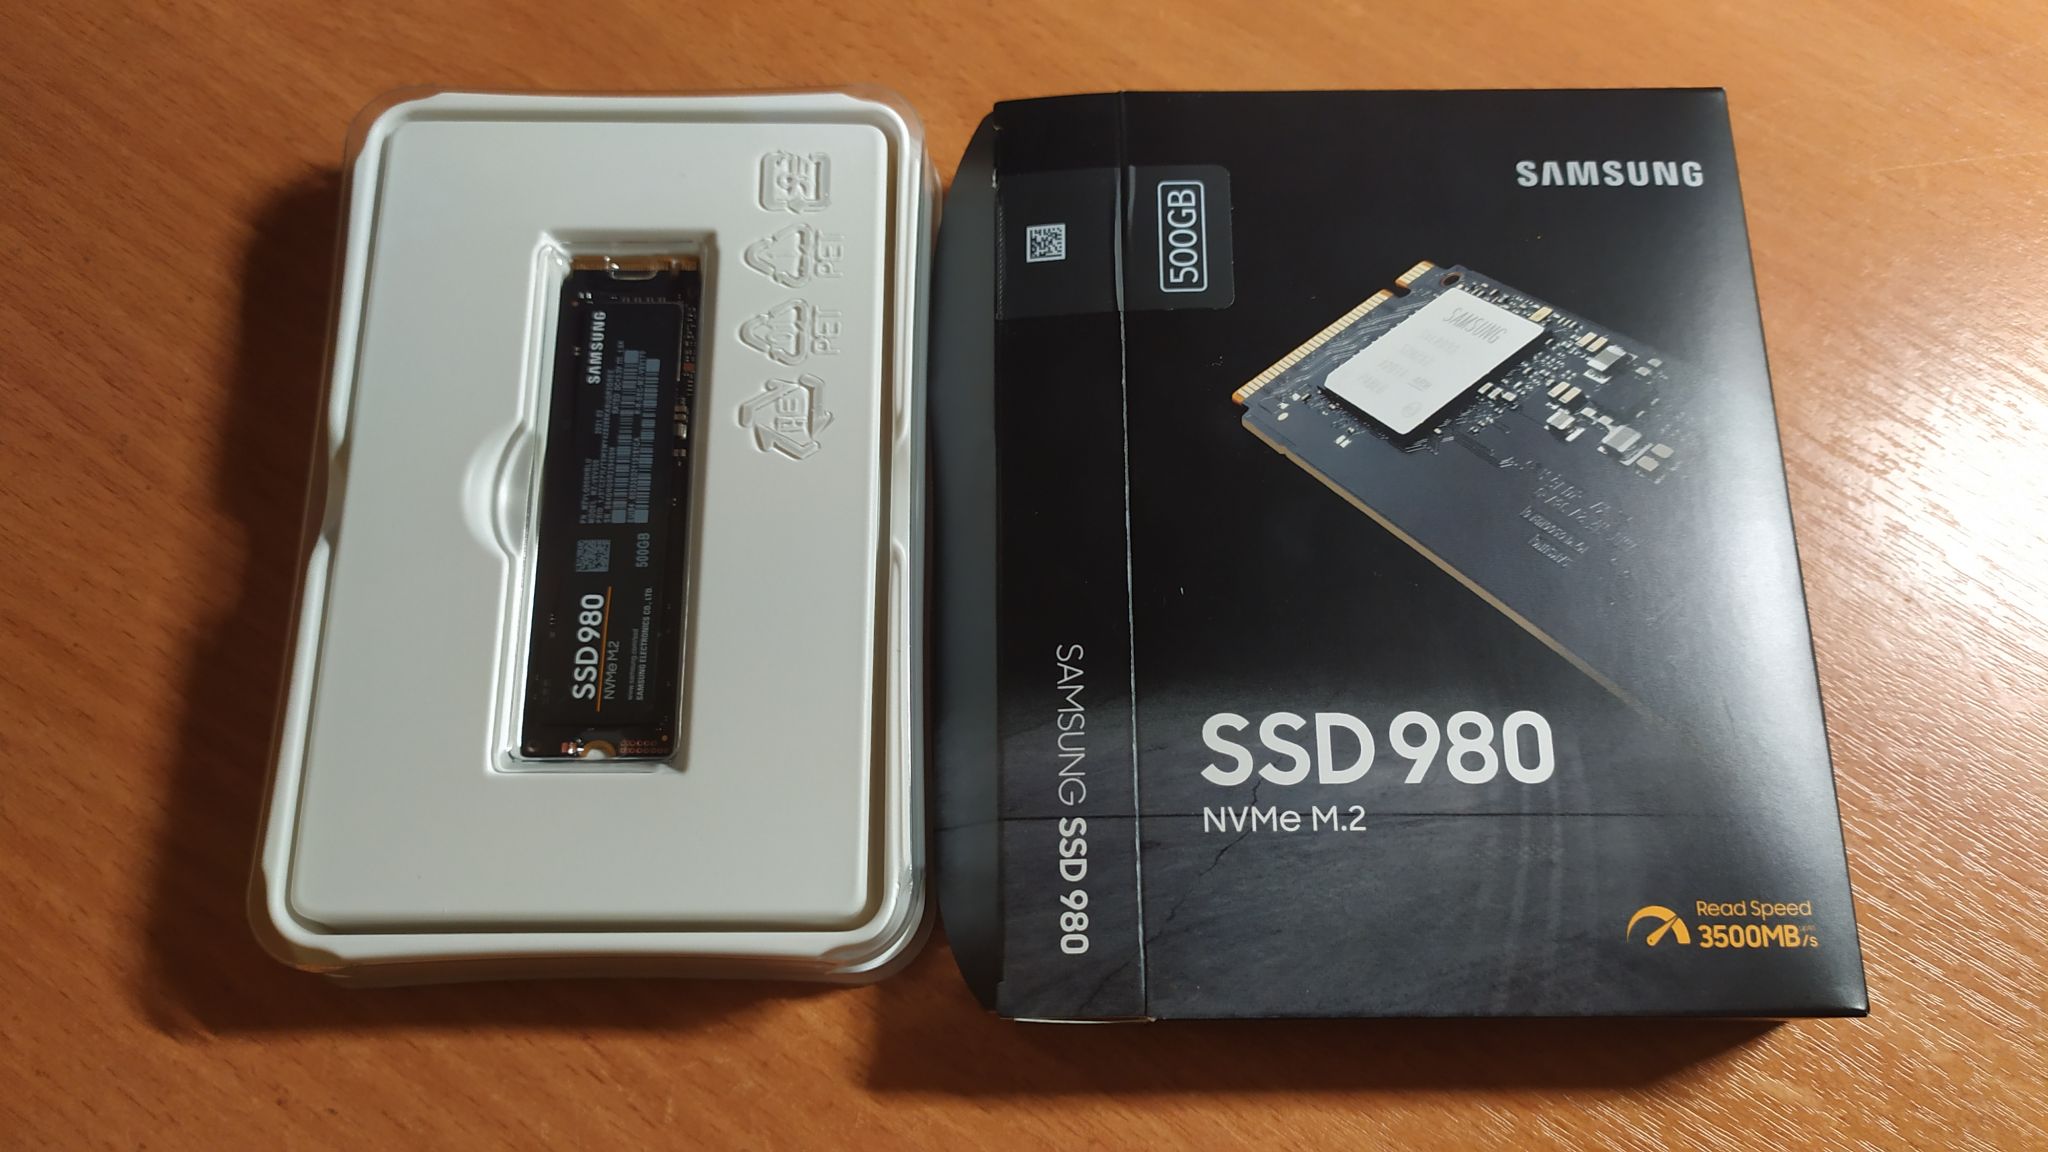 Samsung 980 500gb. Samsung 980 500 ГБ SSD. SSD Samsung 980 MZ v8v500bw. SSD накопитель Samsung 980 MZ v8v500bw 500гб. Samsung SSD 980 500gb.